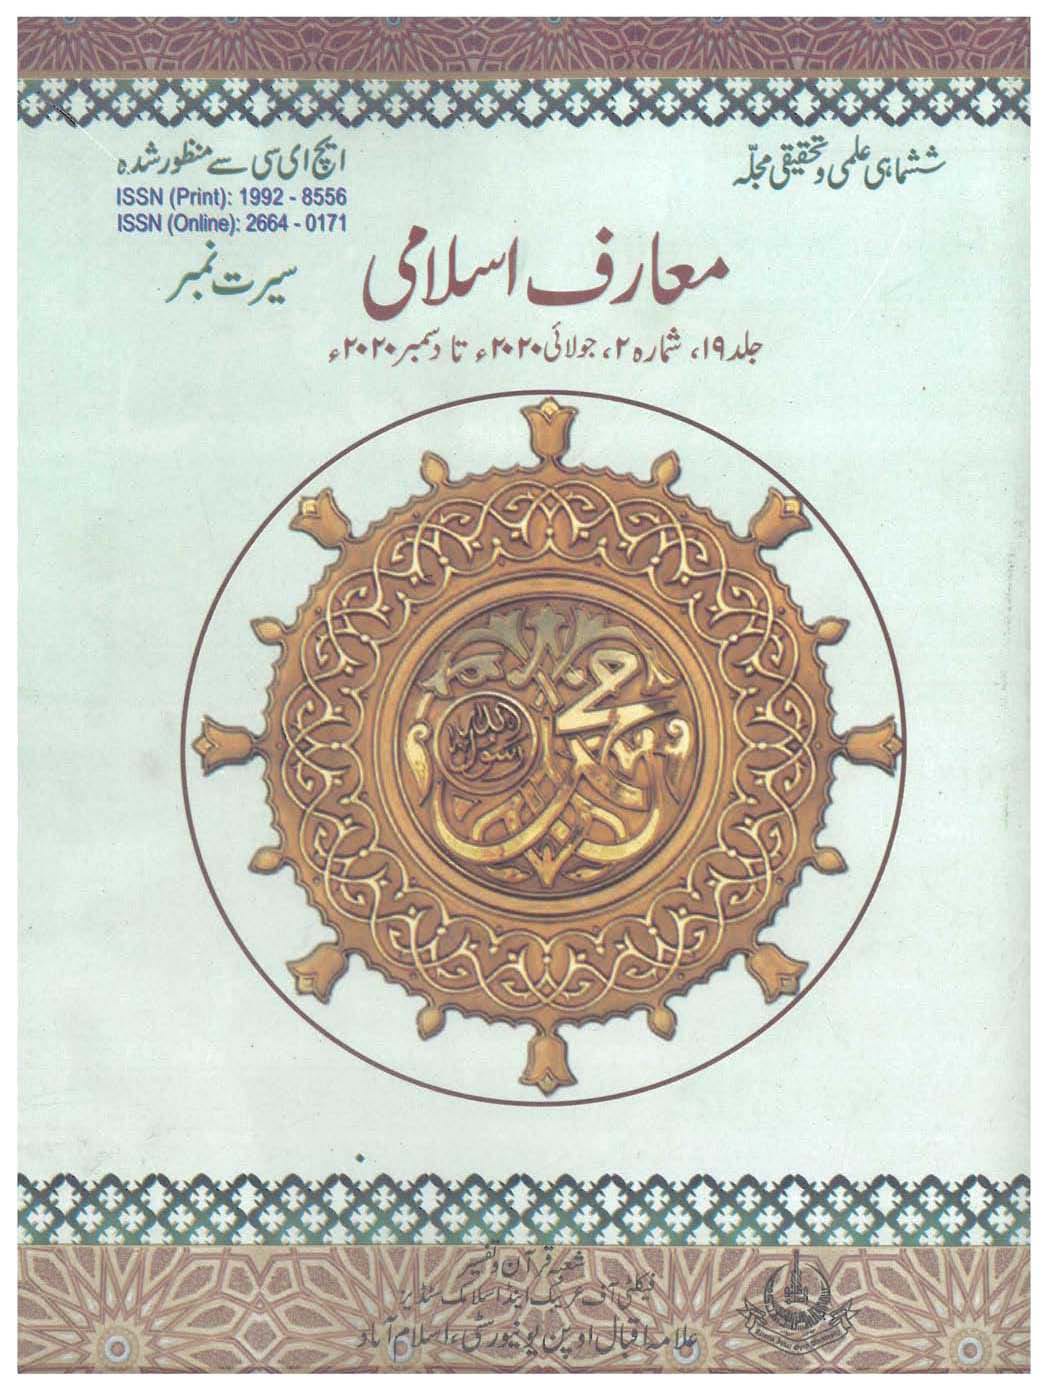 Magzine Cover Image